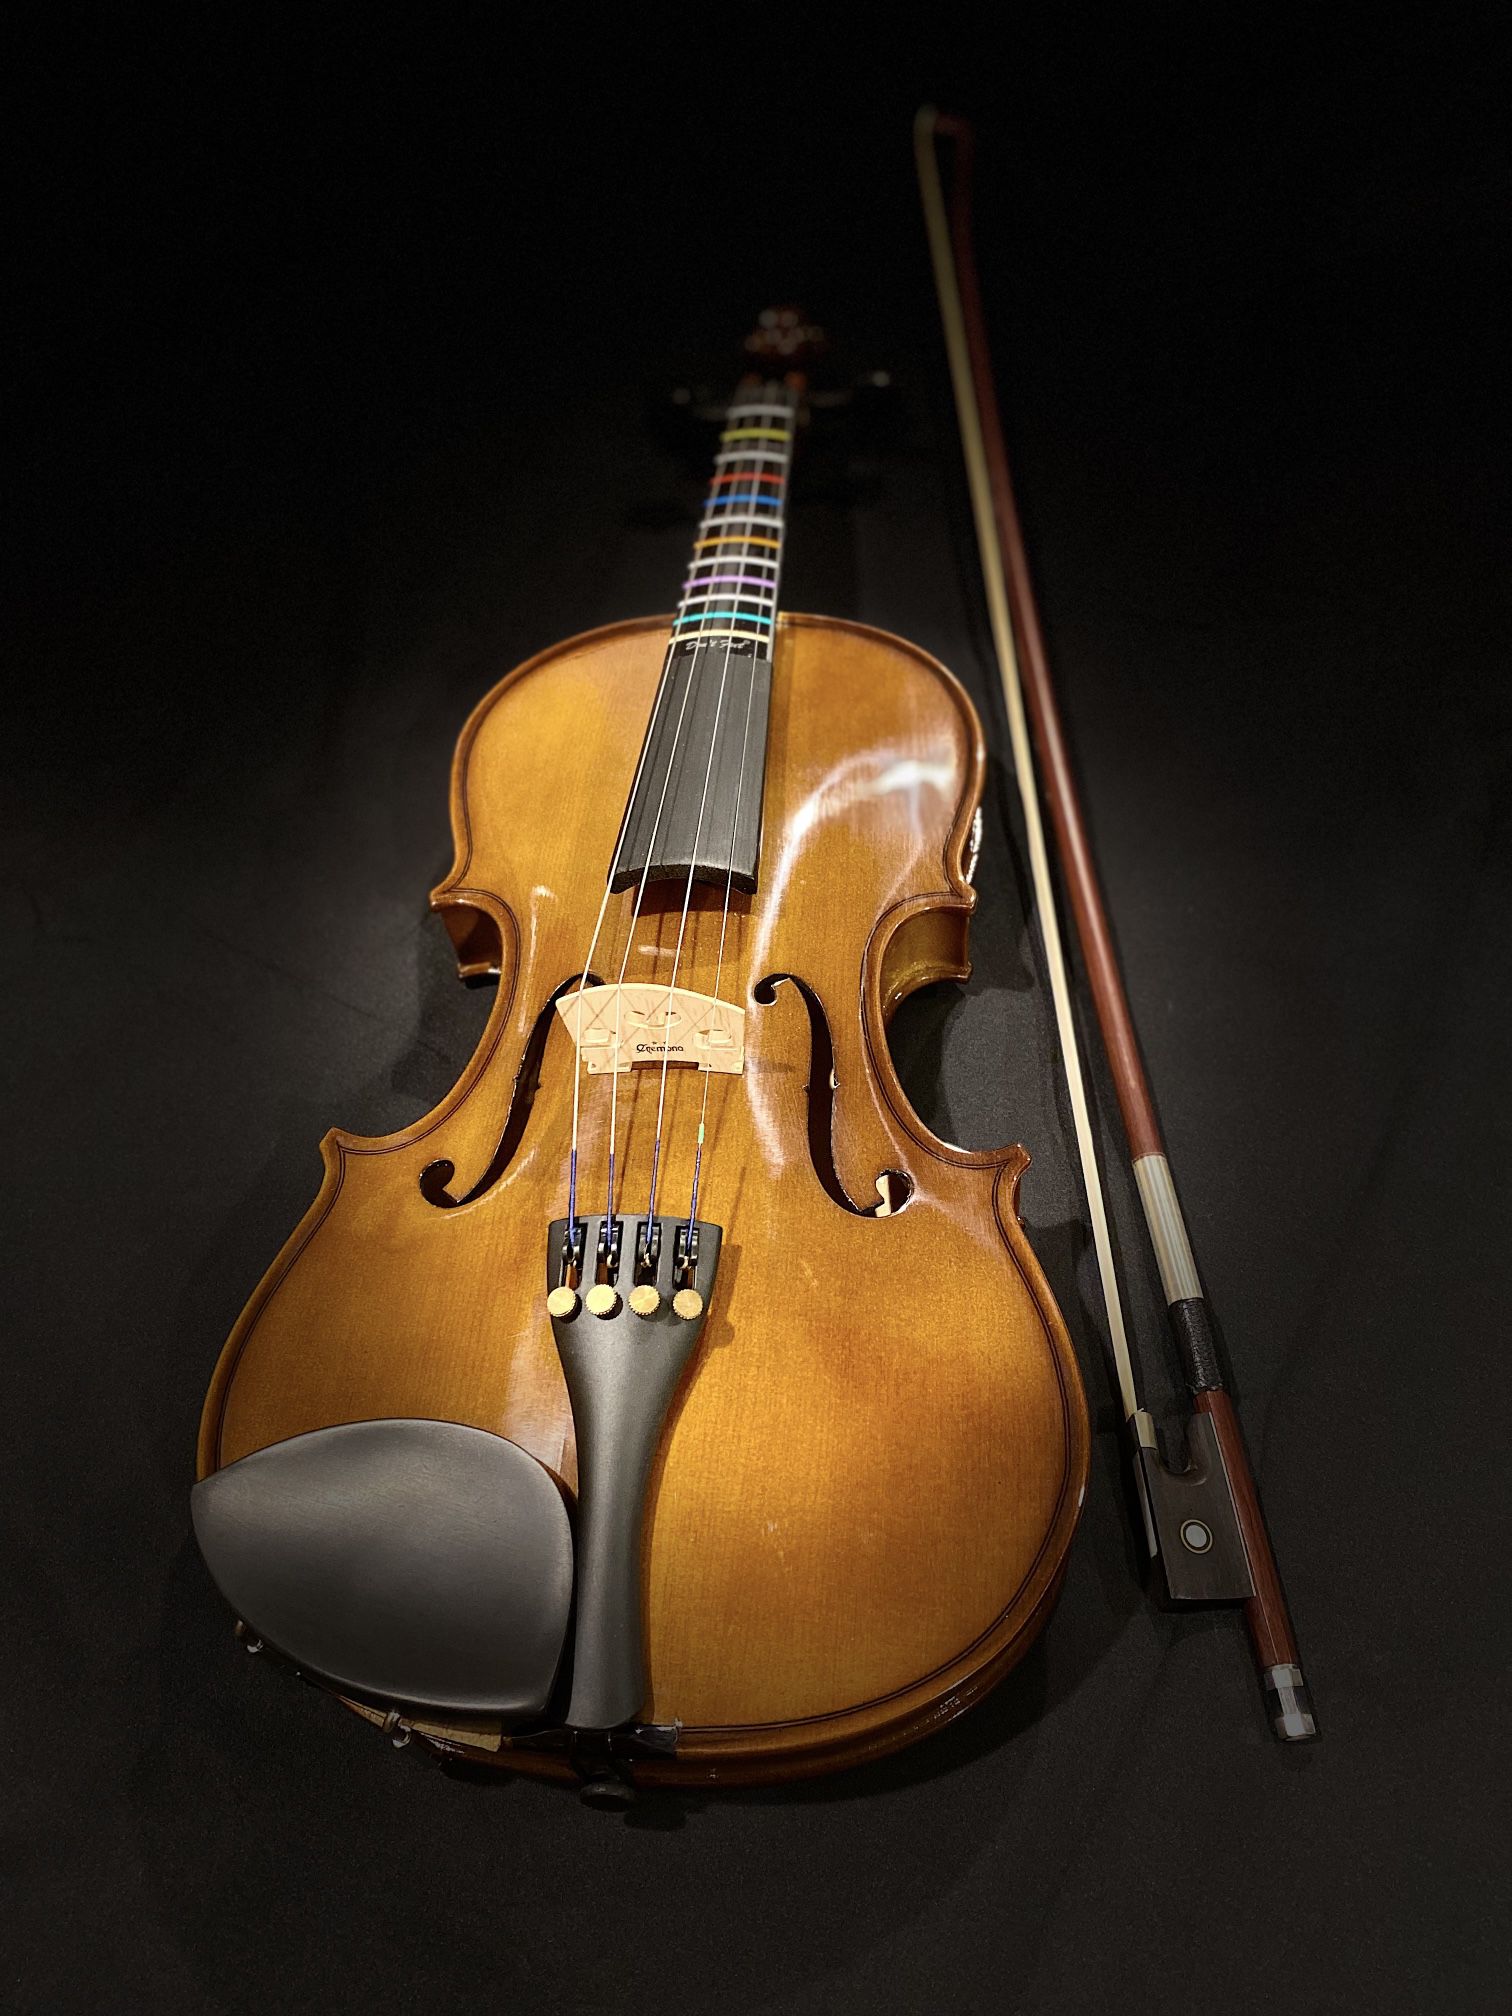 Cremona Violin